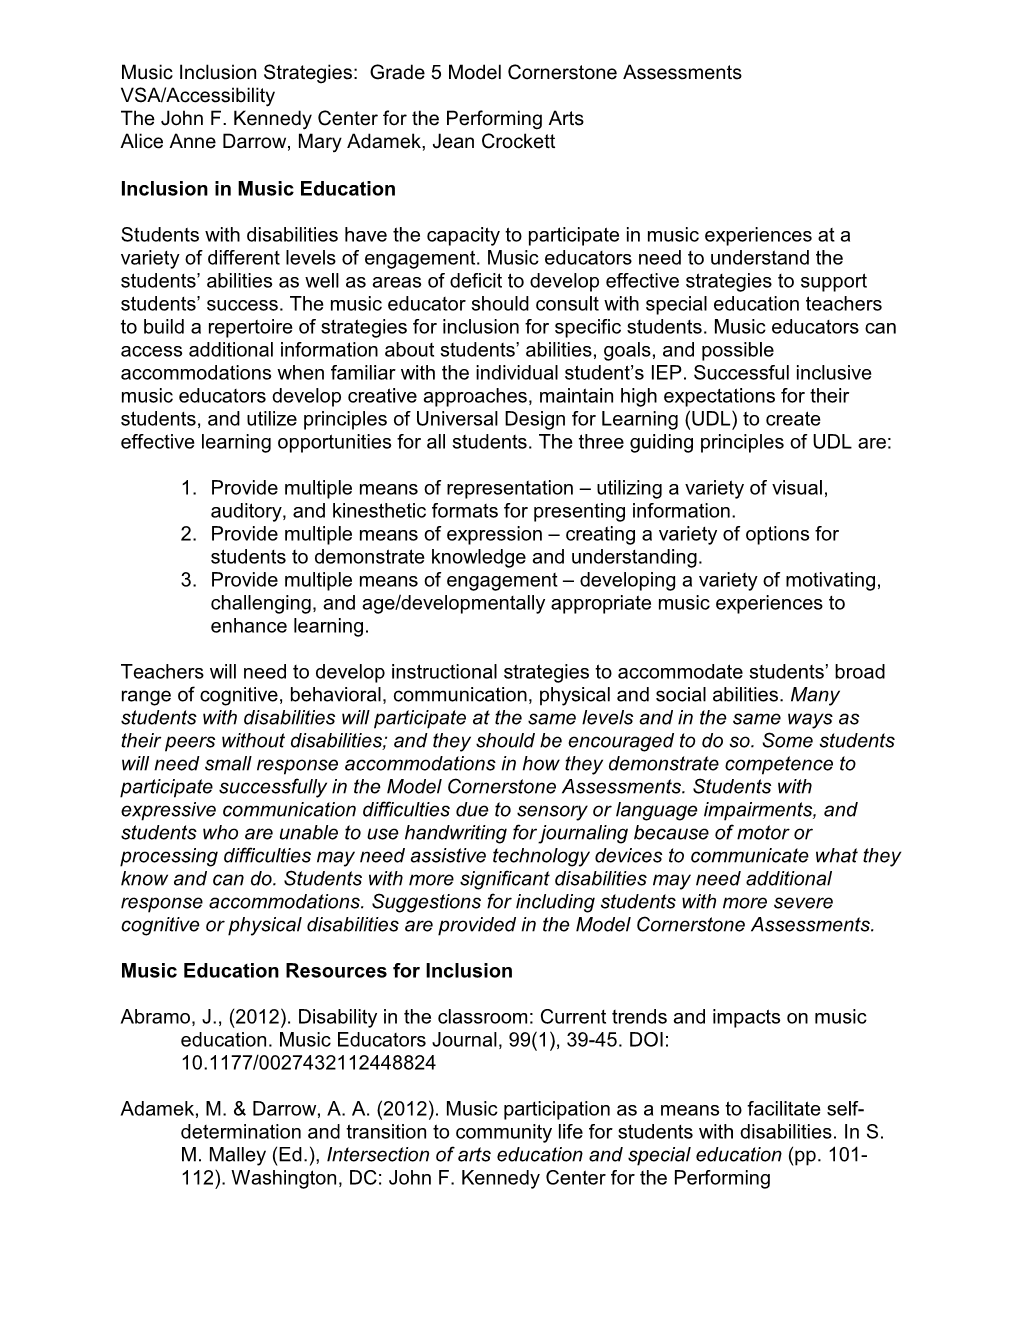 Music Inclusion Strategies: Grade 5 Model Cornerstone Assessments VSA/Accessibility the John F